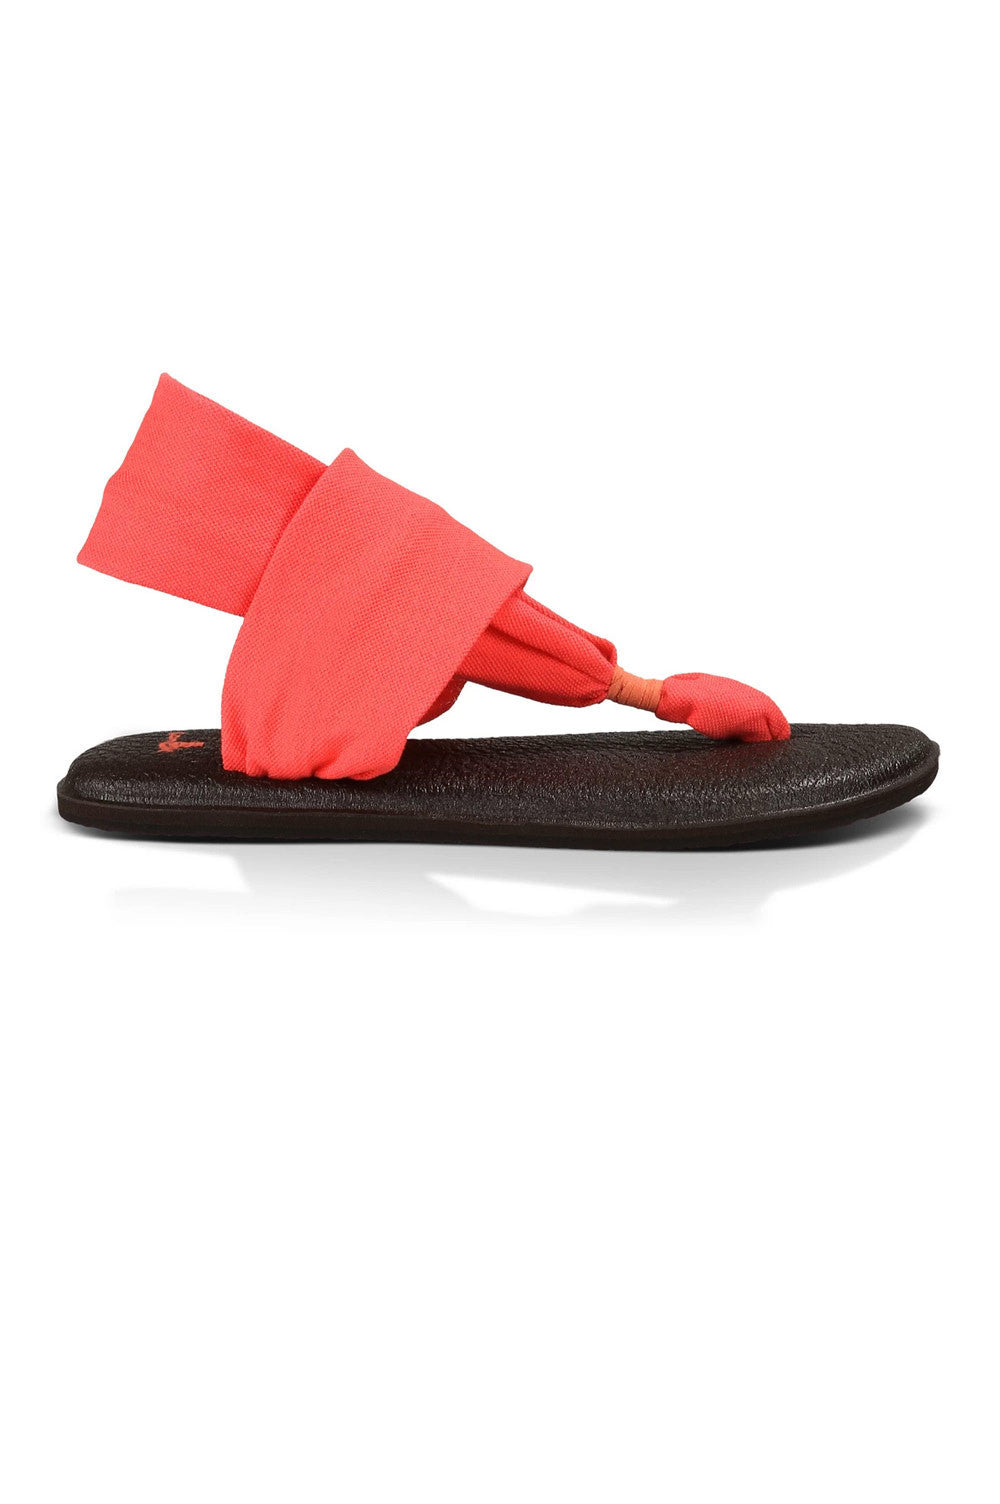 Women’s size 6 Sanuk yoga sling sandals